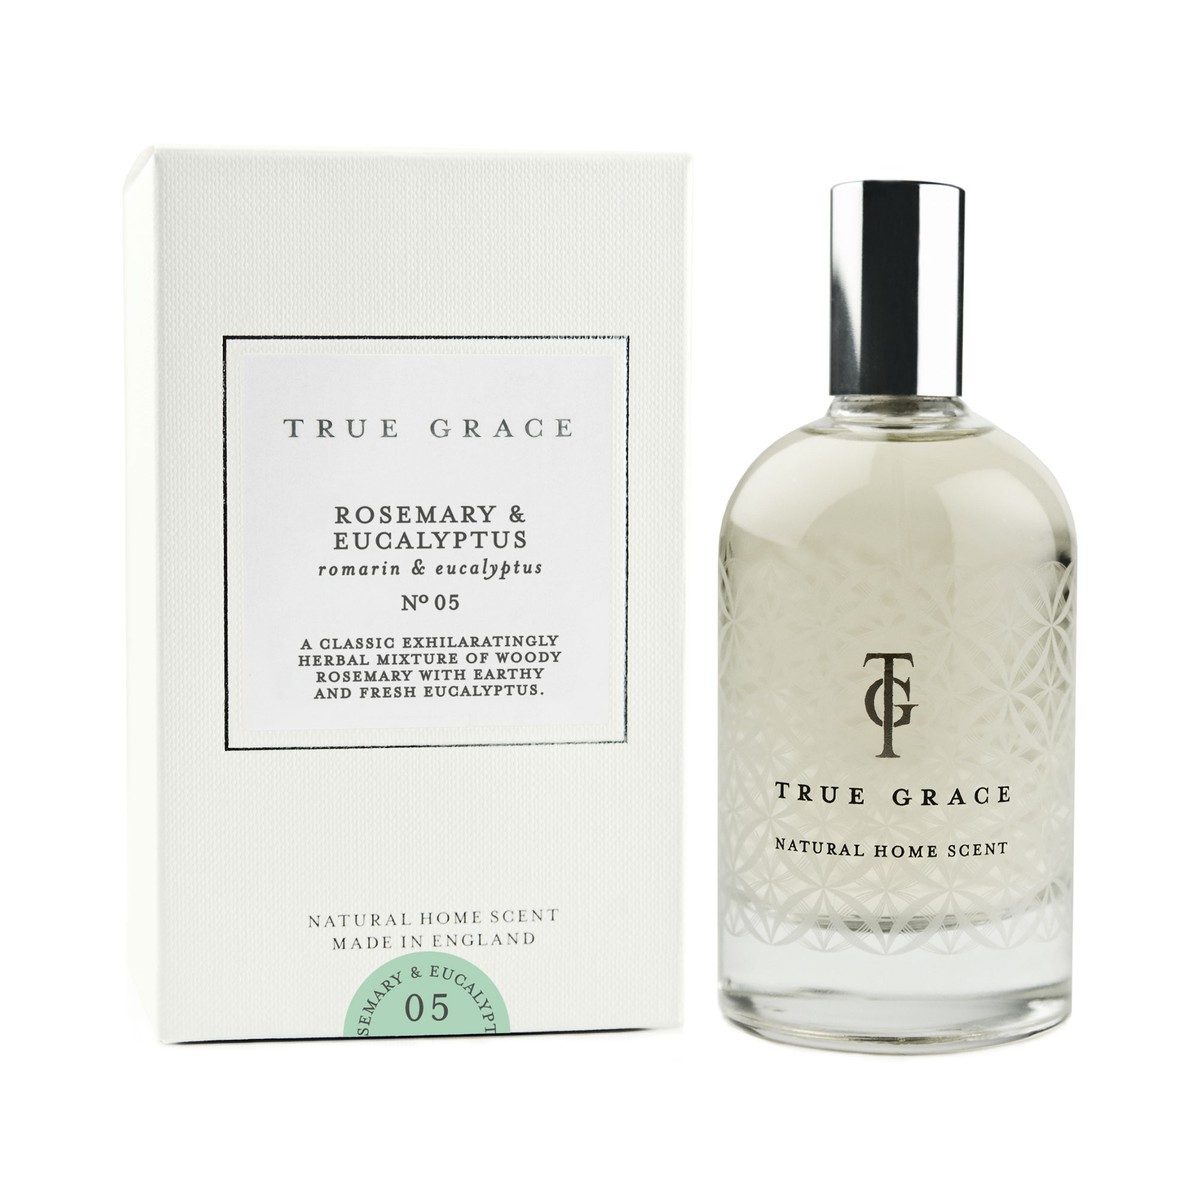 True Grace VILLAGE Parfum de maison village rosemary&eucalyptus  100ml